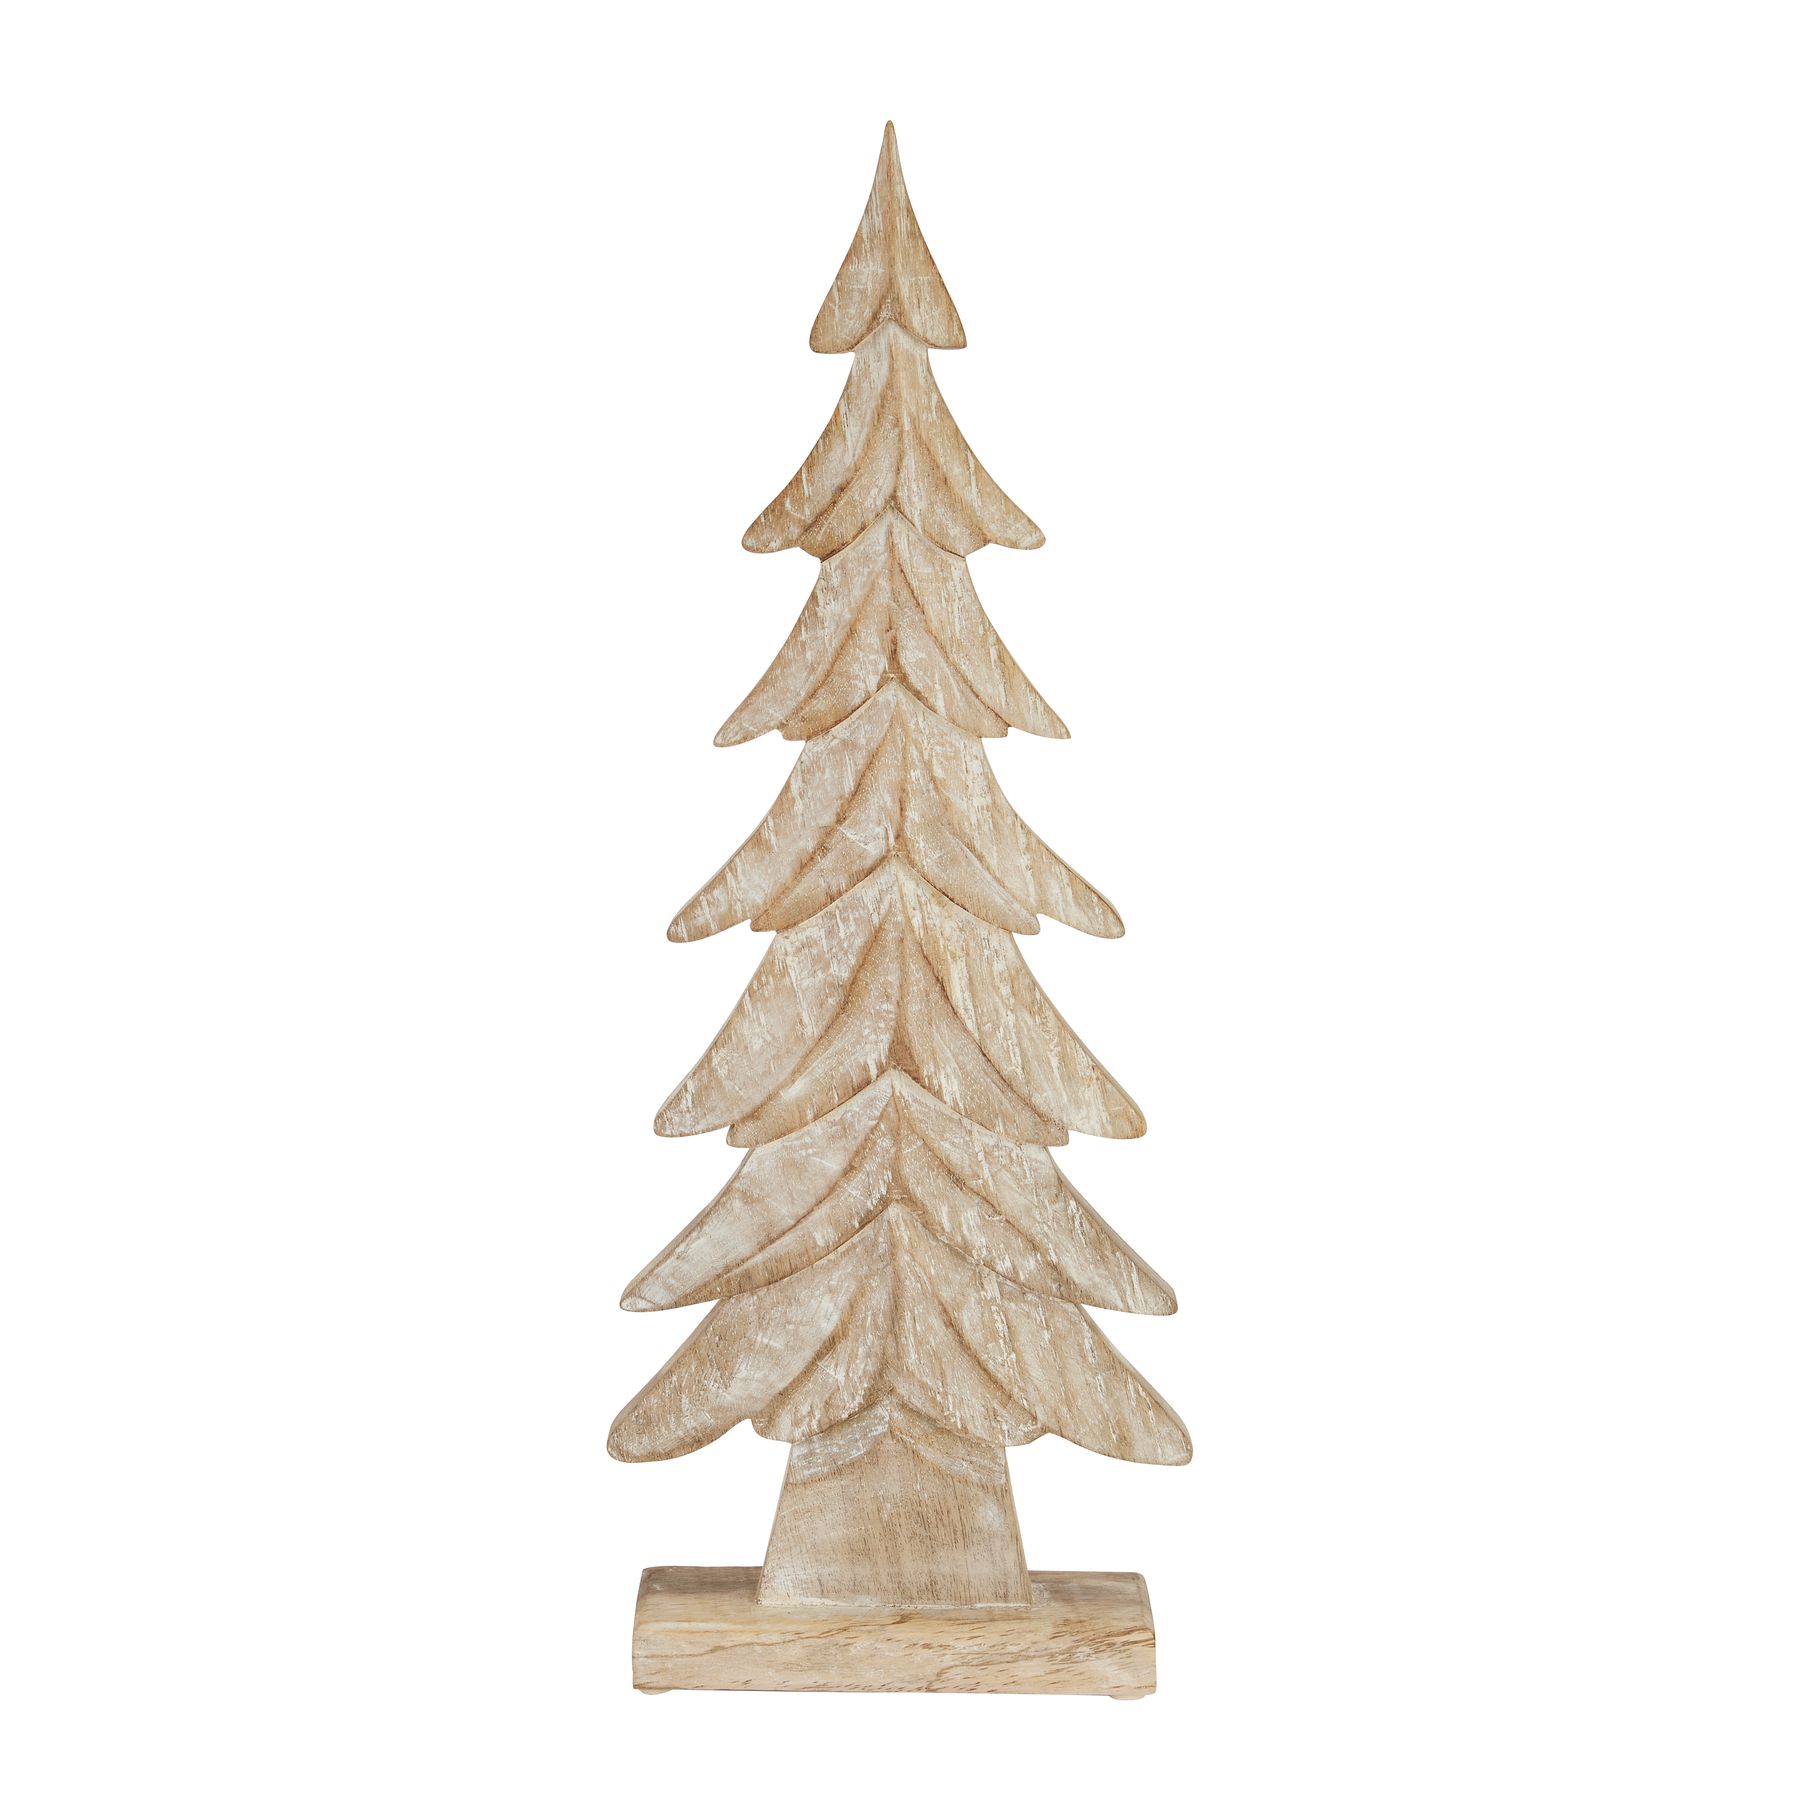 Carved Wood Christmas Tree - Image 1